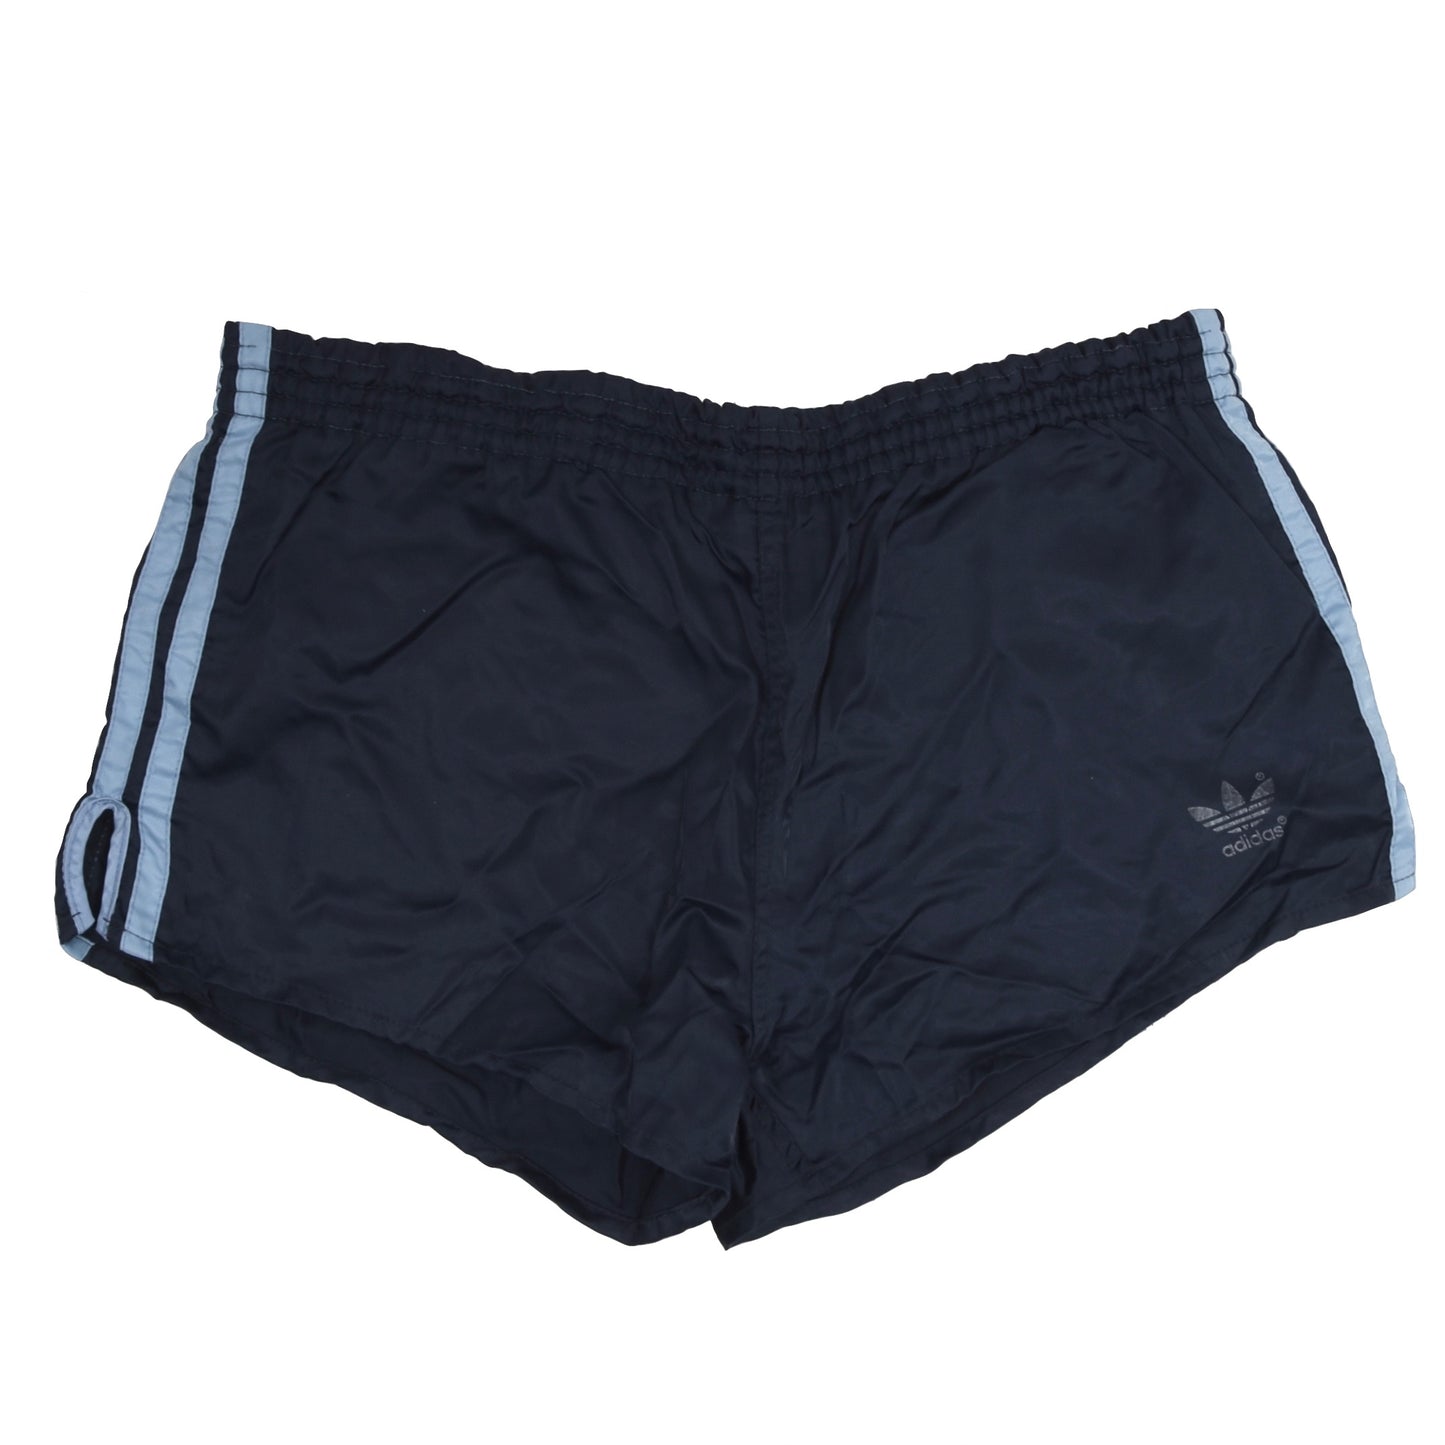 Vintage Adidas Sprinter Shorts Size D5 - Navy